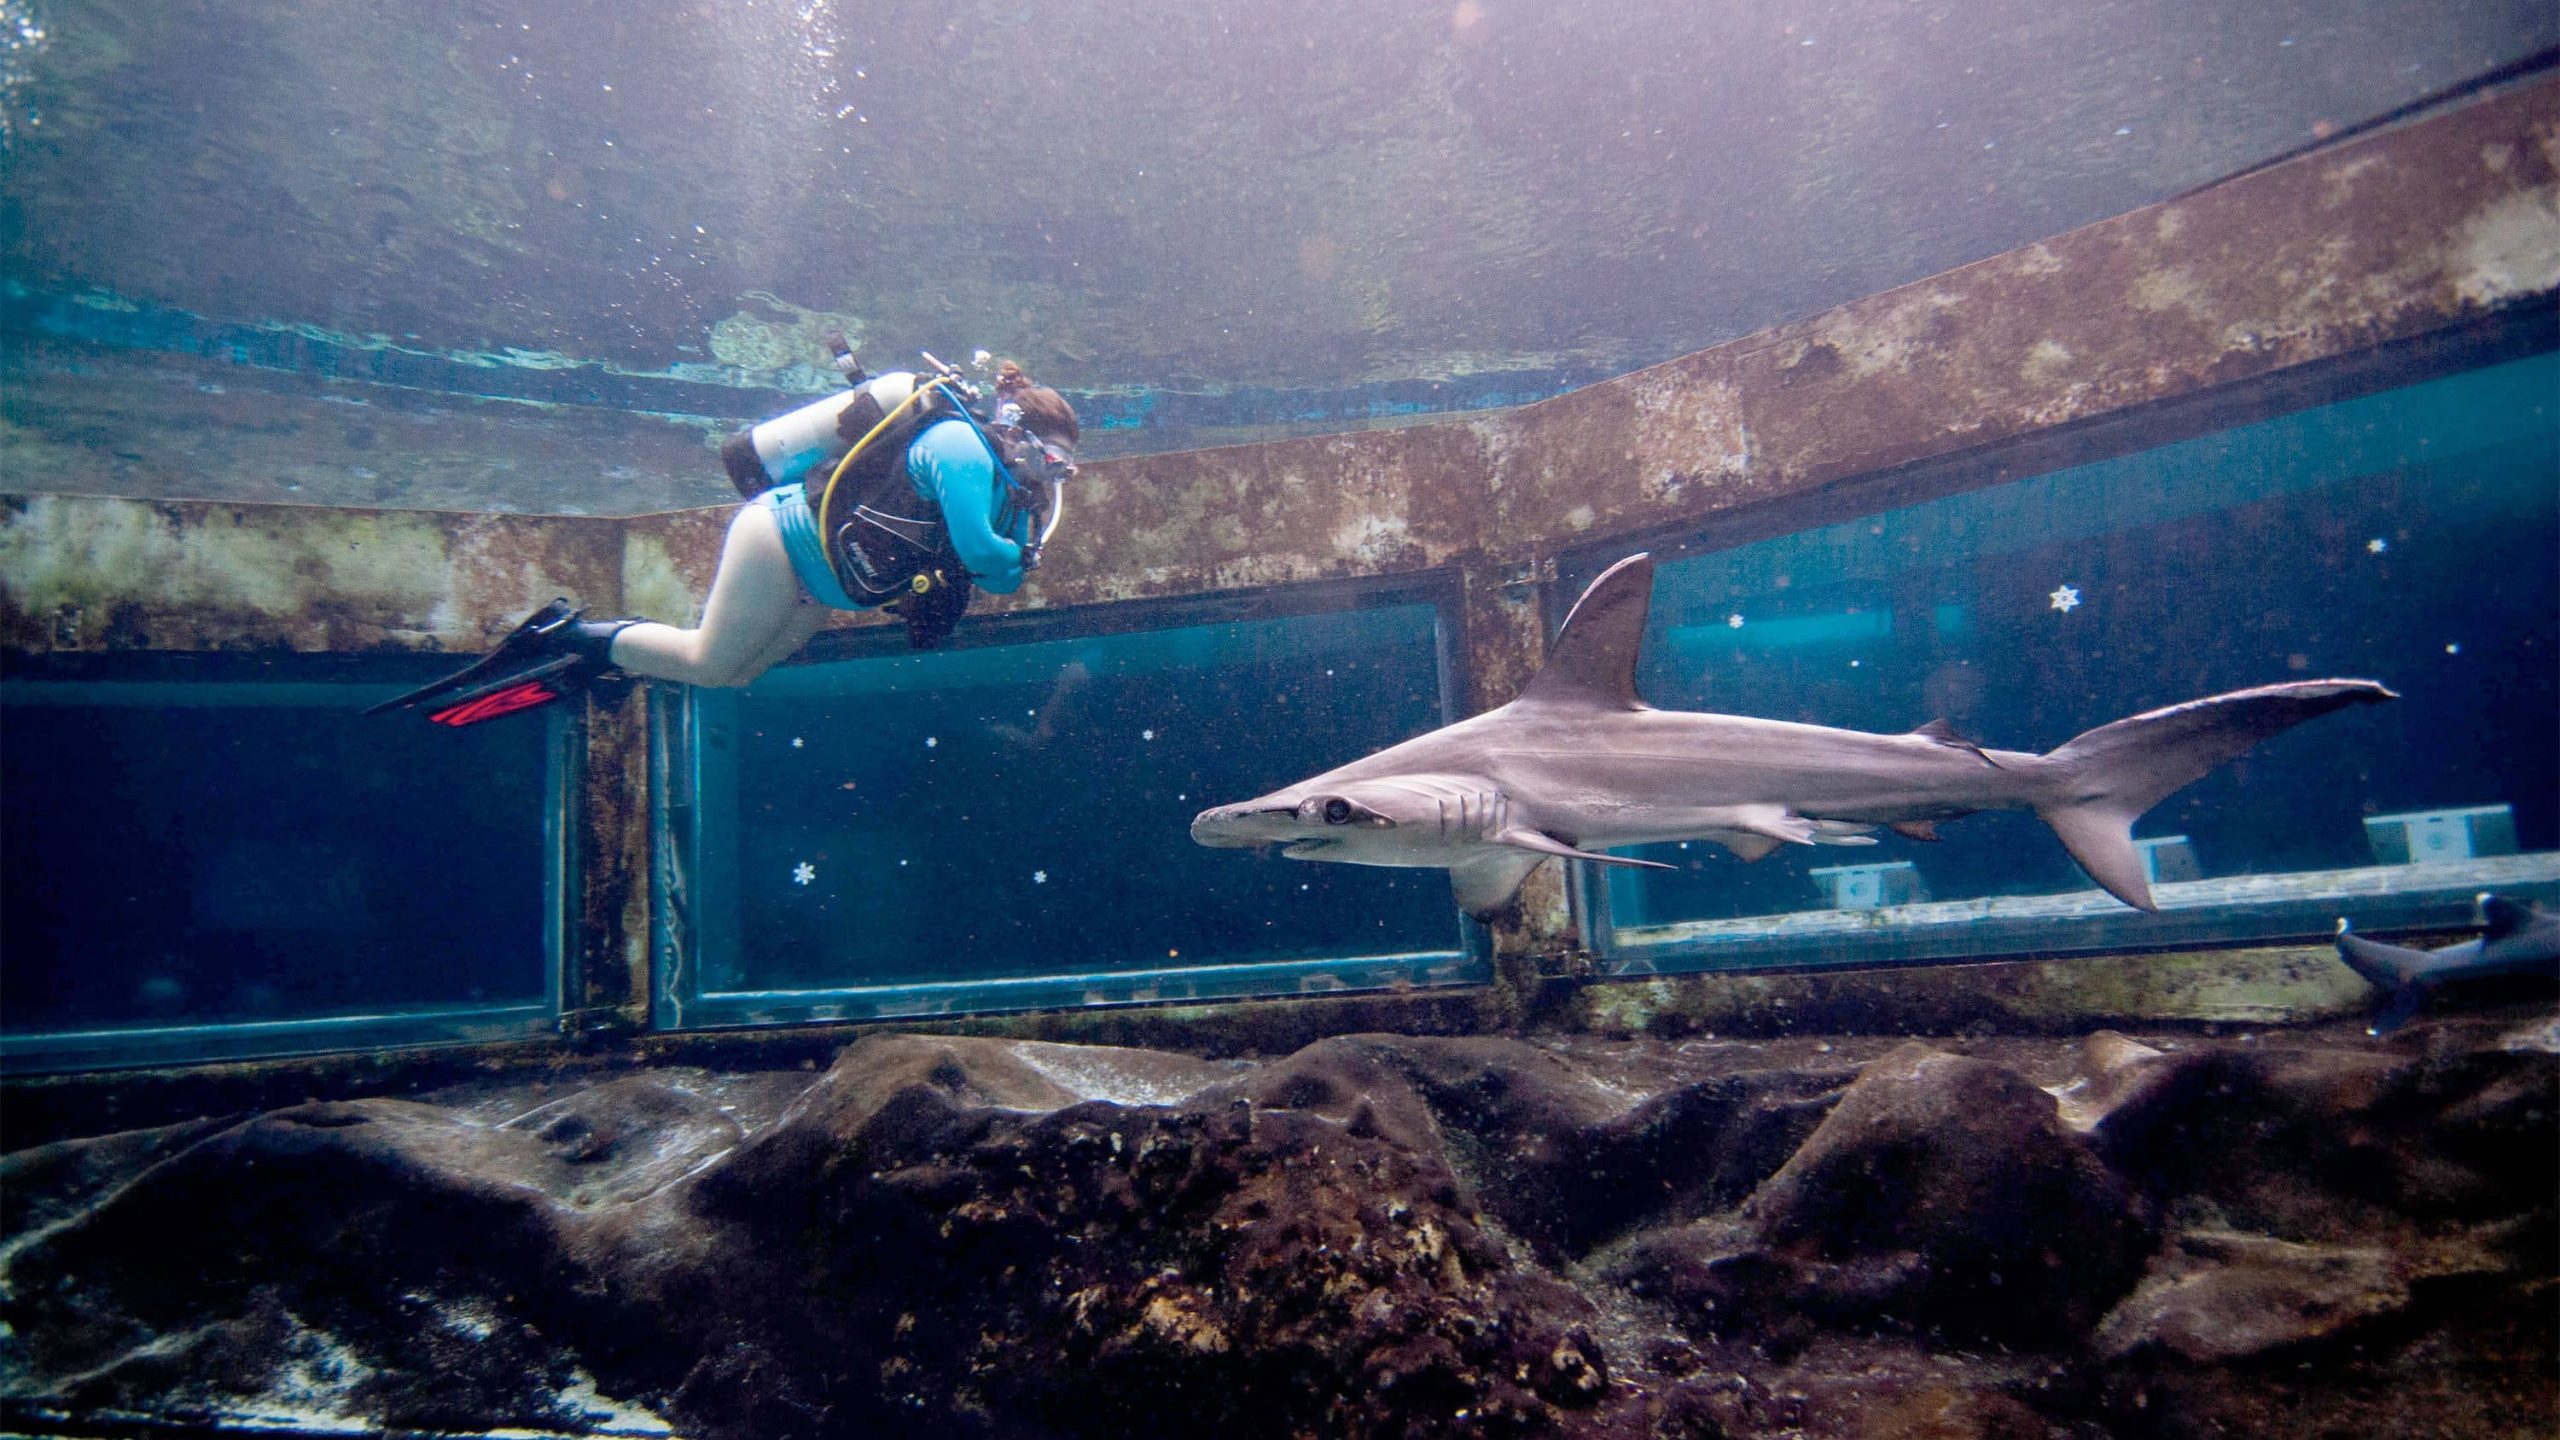 Scuba diving with sharks in an Aquarium